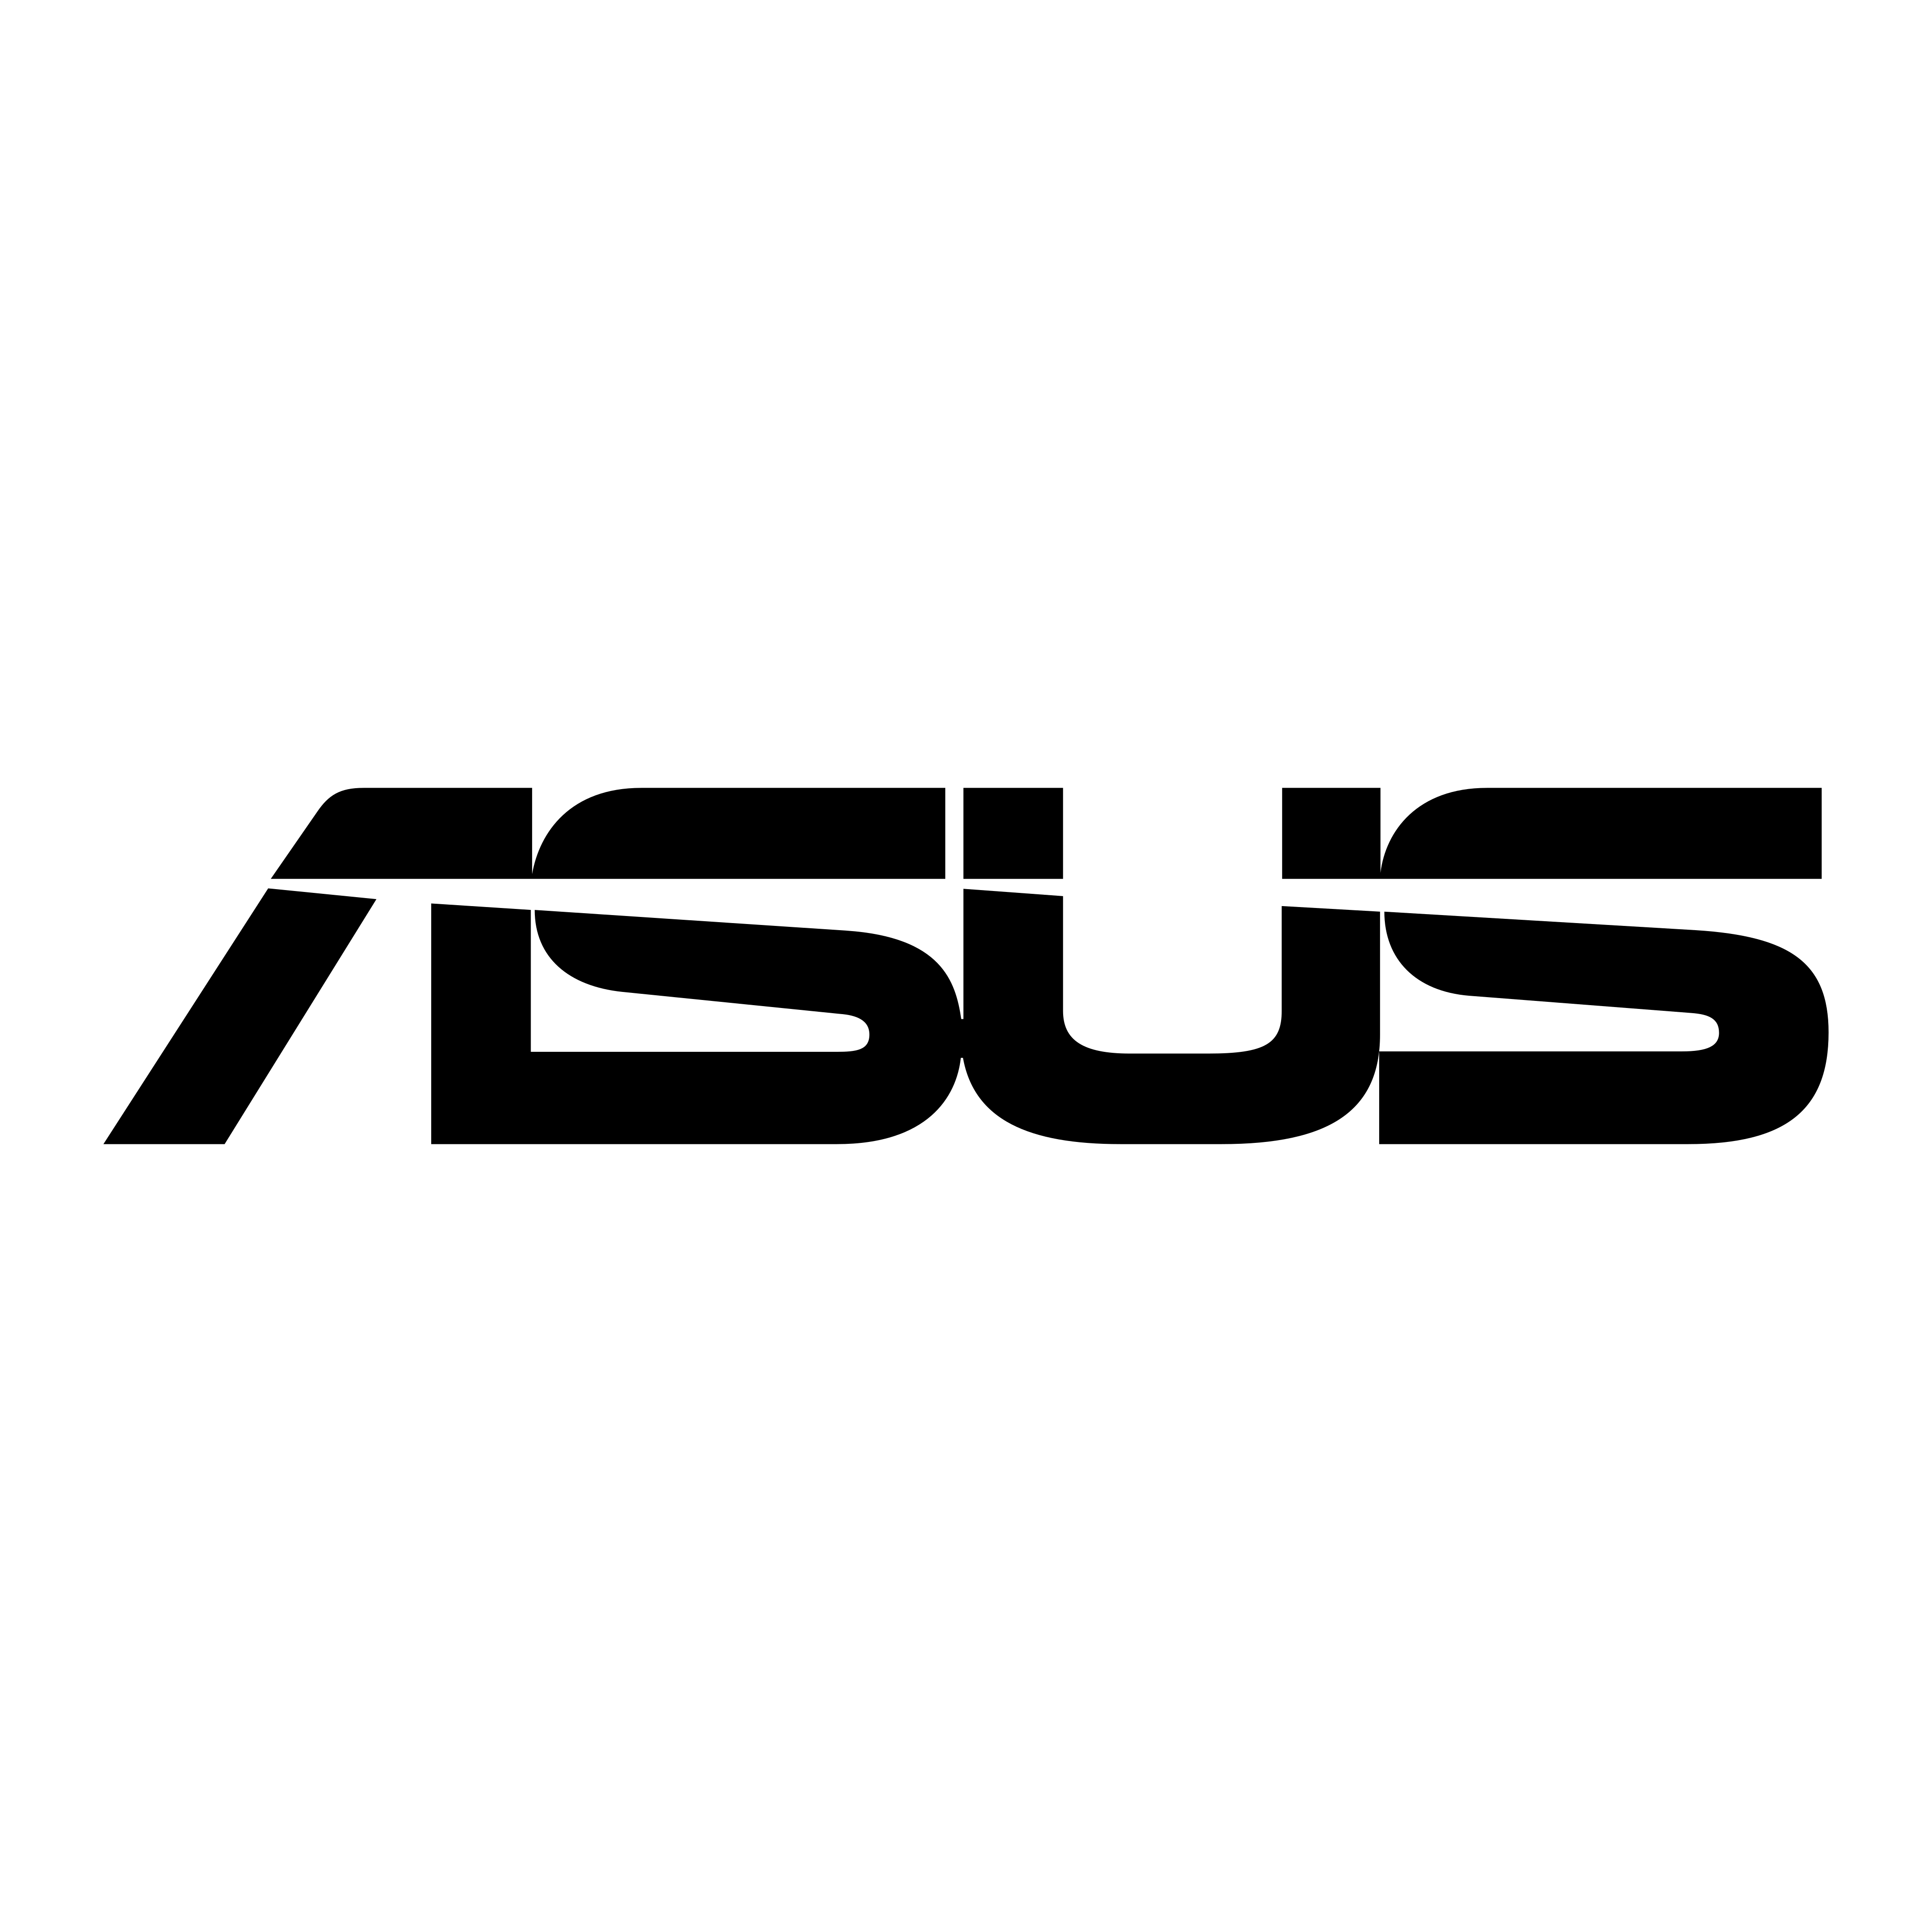 Logo de Asus SVG